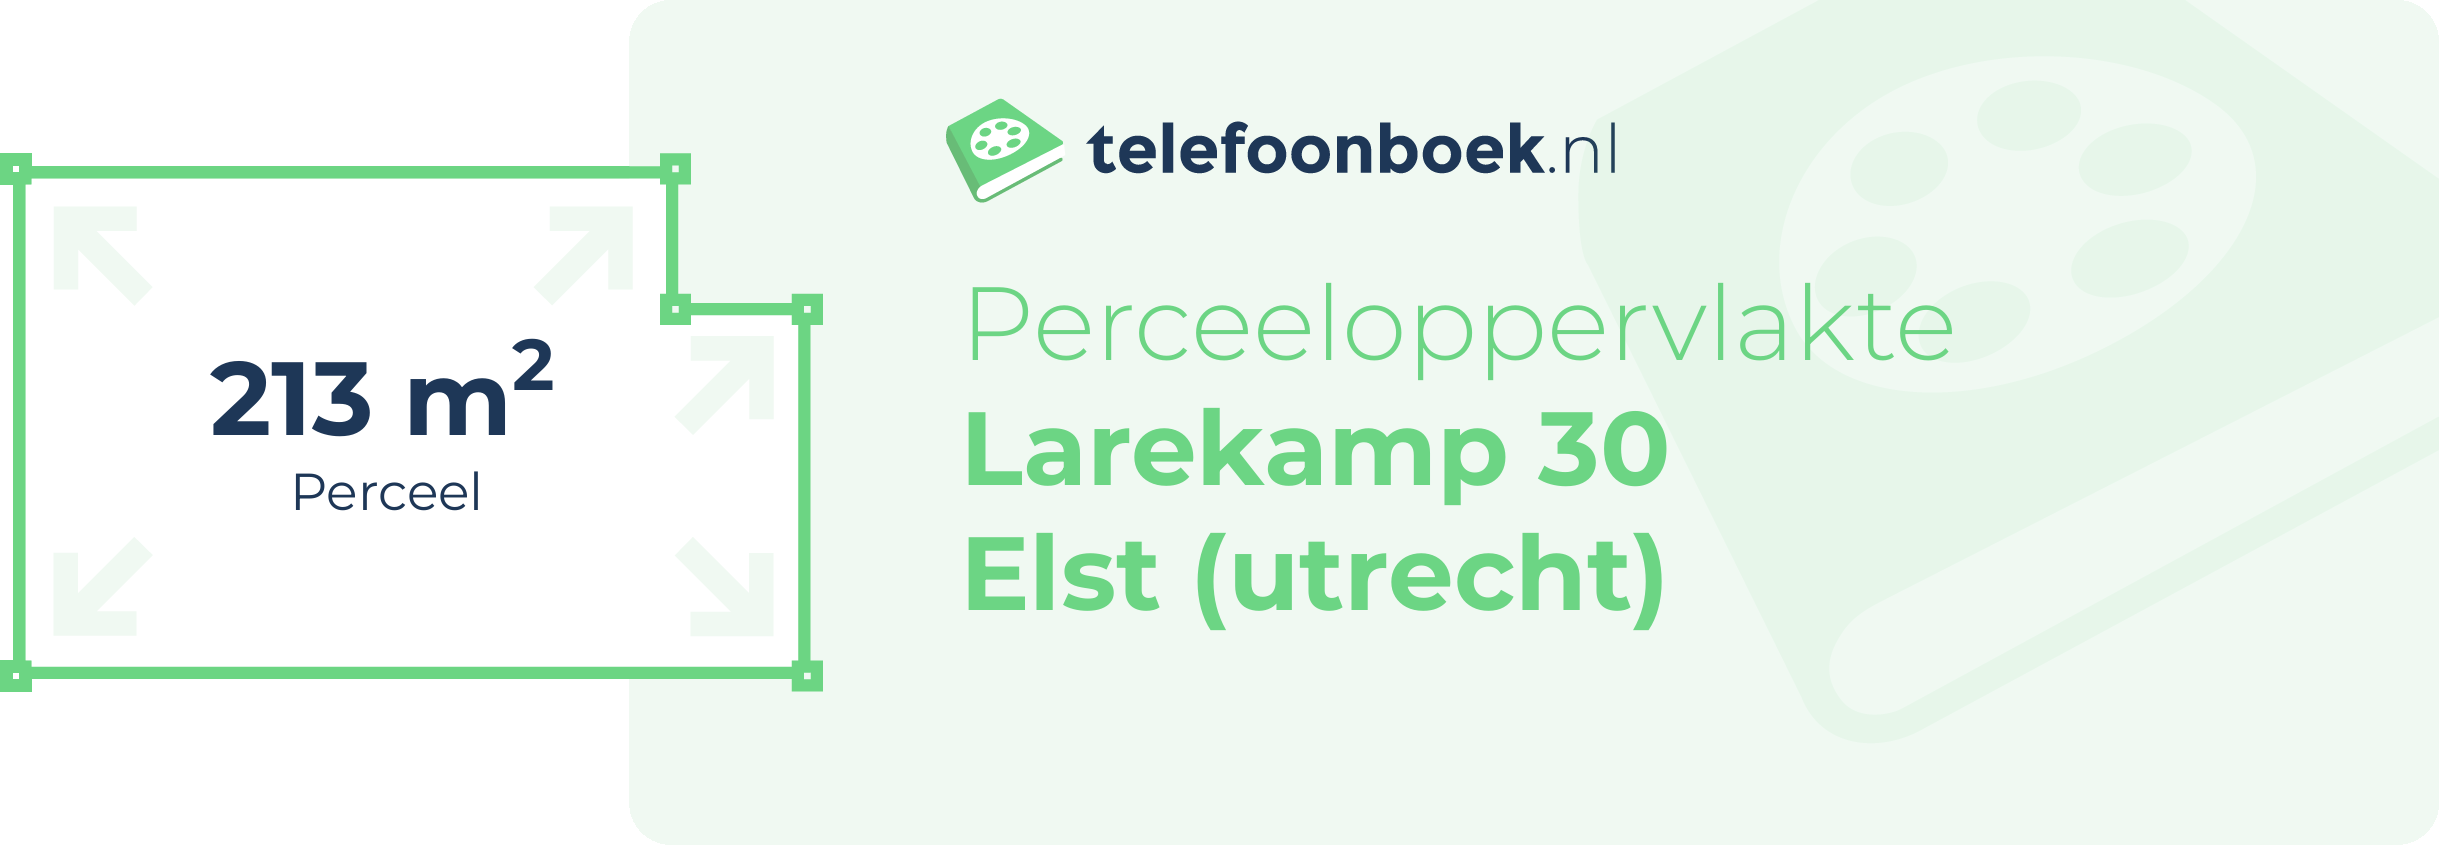 Perceeloppervlakte Larekamp 30 Elst (Utrecht)